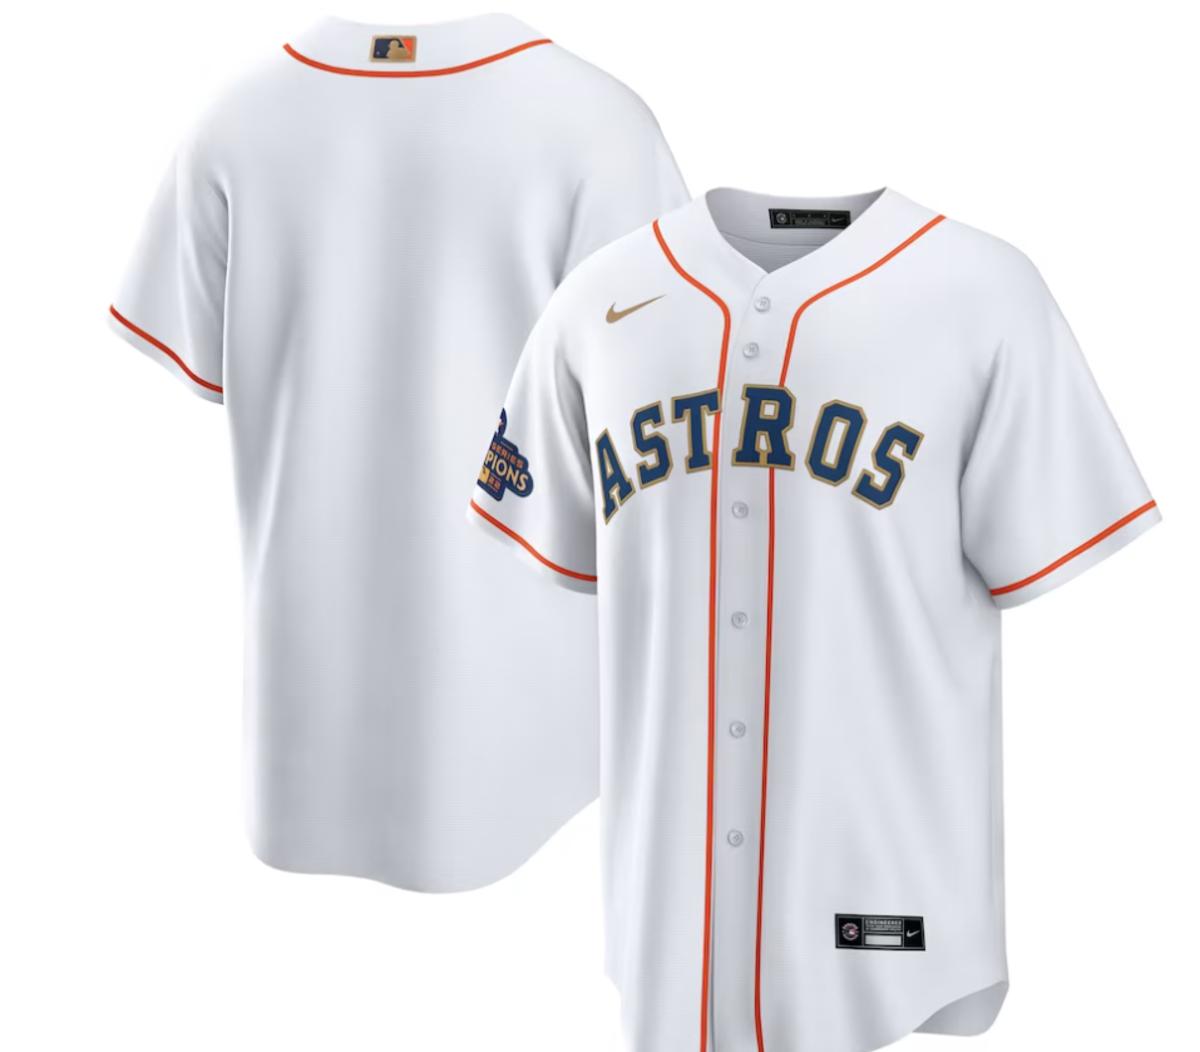 How to buy Houston Astros Gold Rush uniforms, championship merchandise